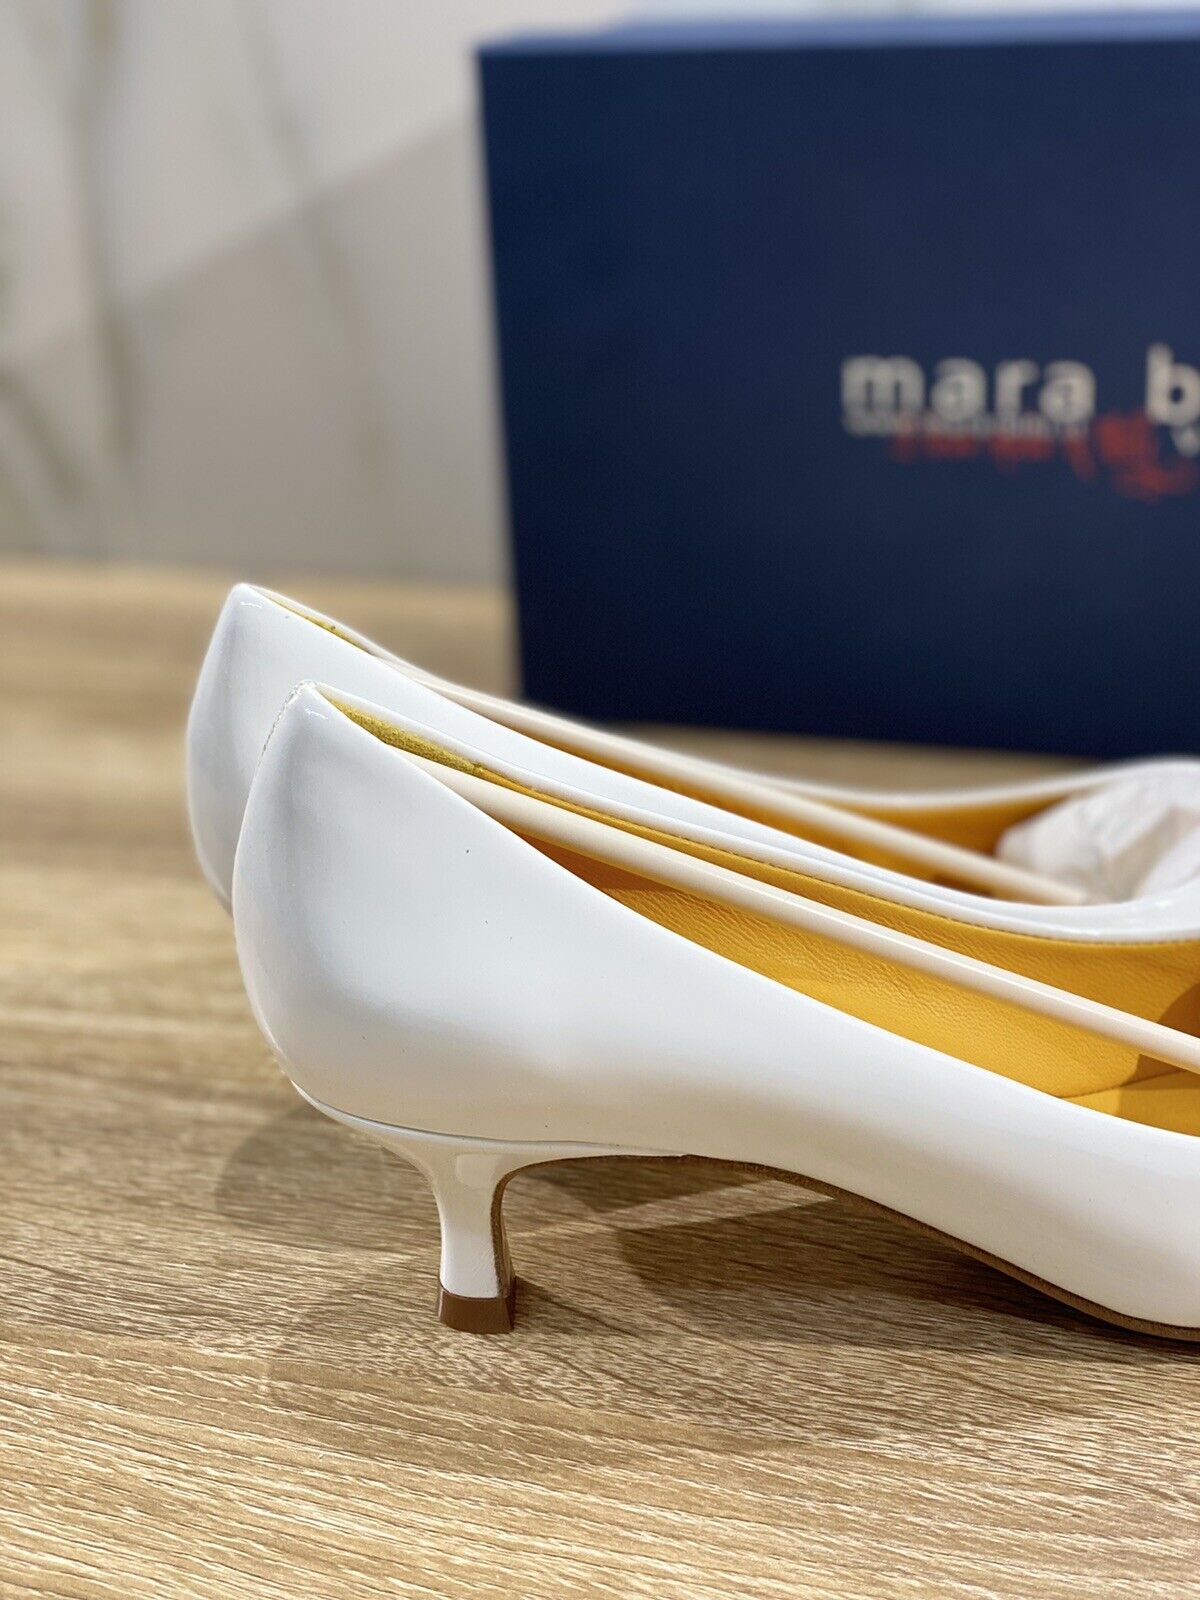 Mara Bini Decolte’ Donna L820 In Naplak Bianco Luxury Handamde In Italy 36.5